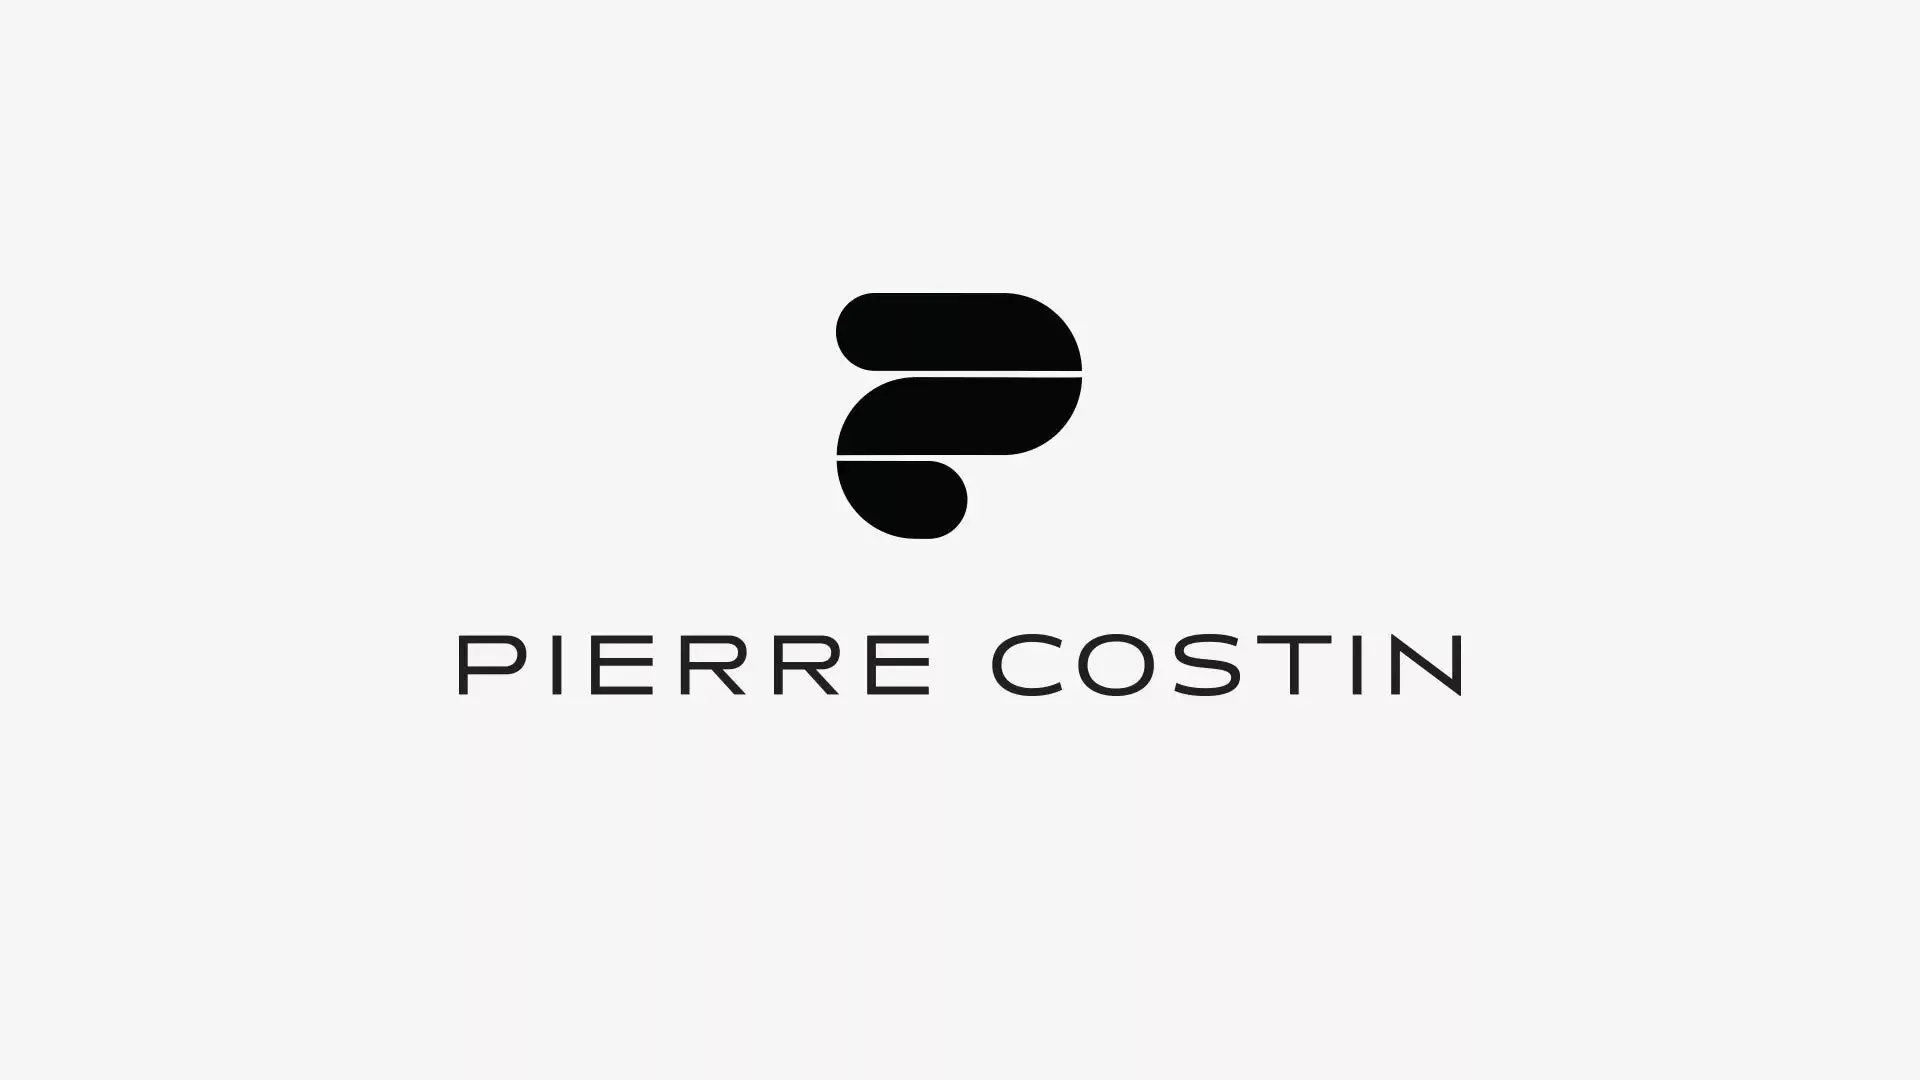 Pierre Costin